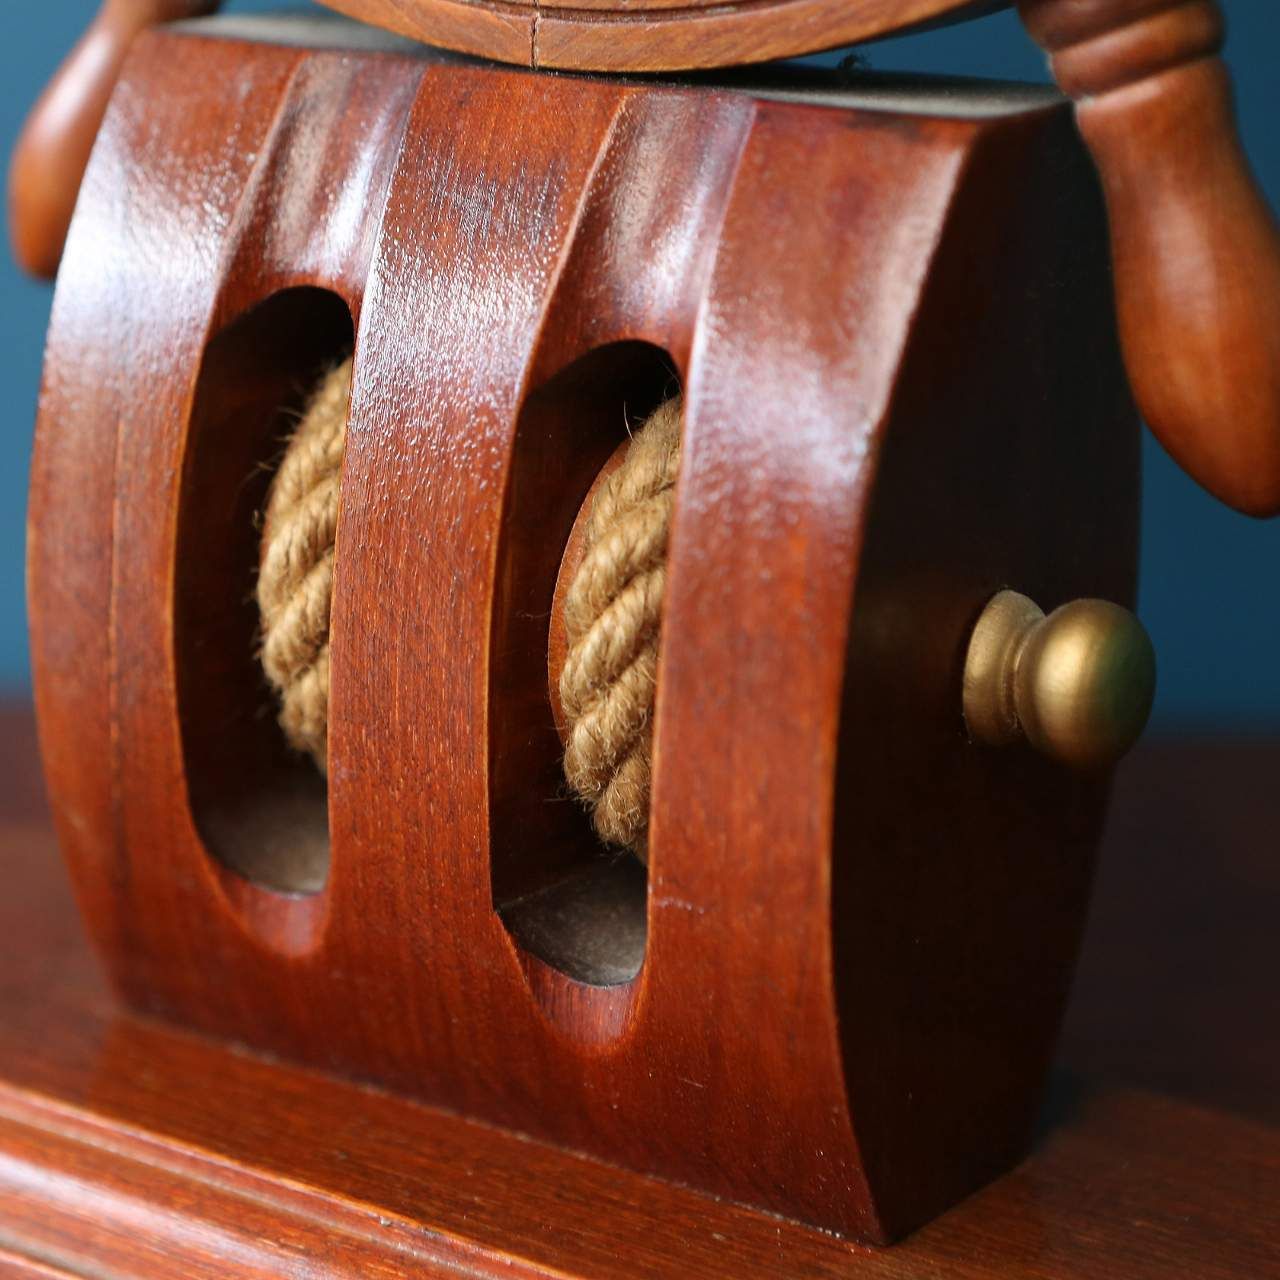 Wooden Sailor's Helm Clock, Antique Sailor's Watch